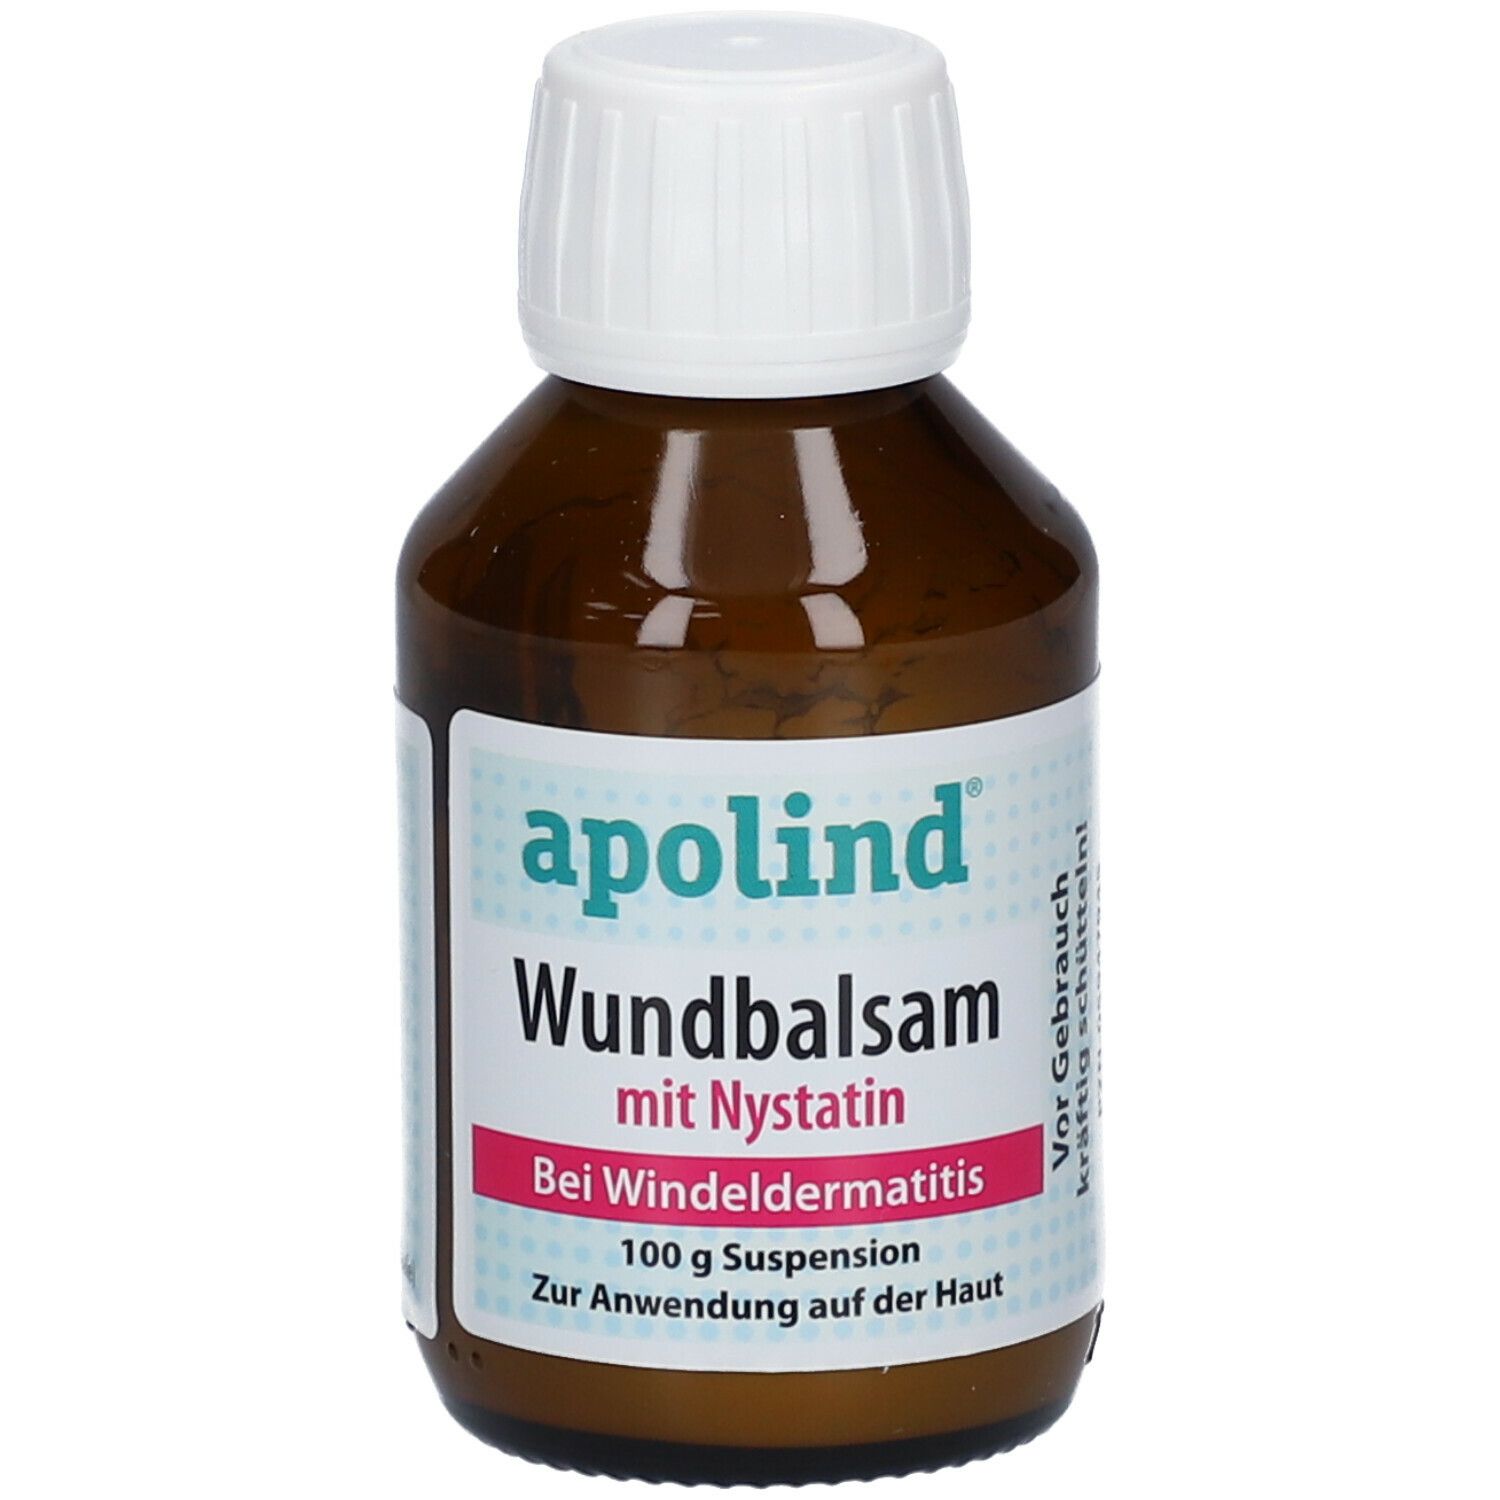 apolind® Wundbalsam mit Nystatin